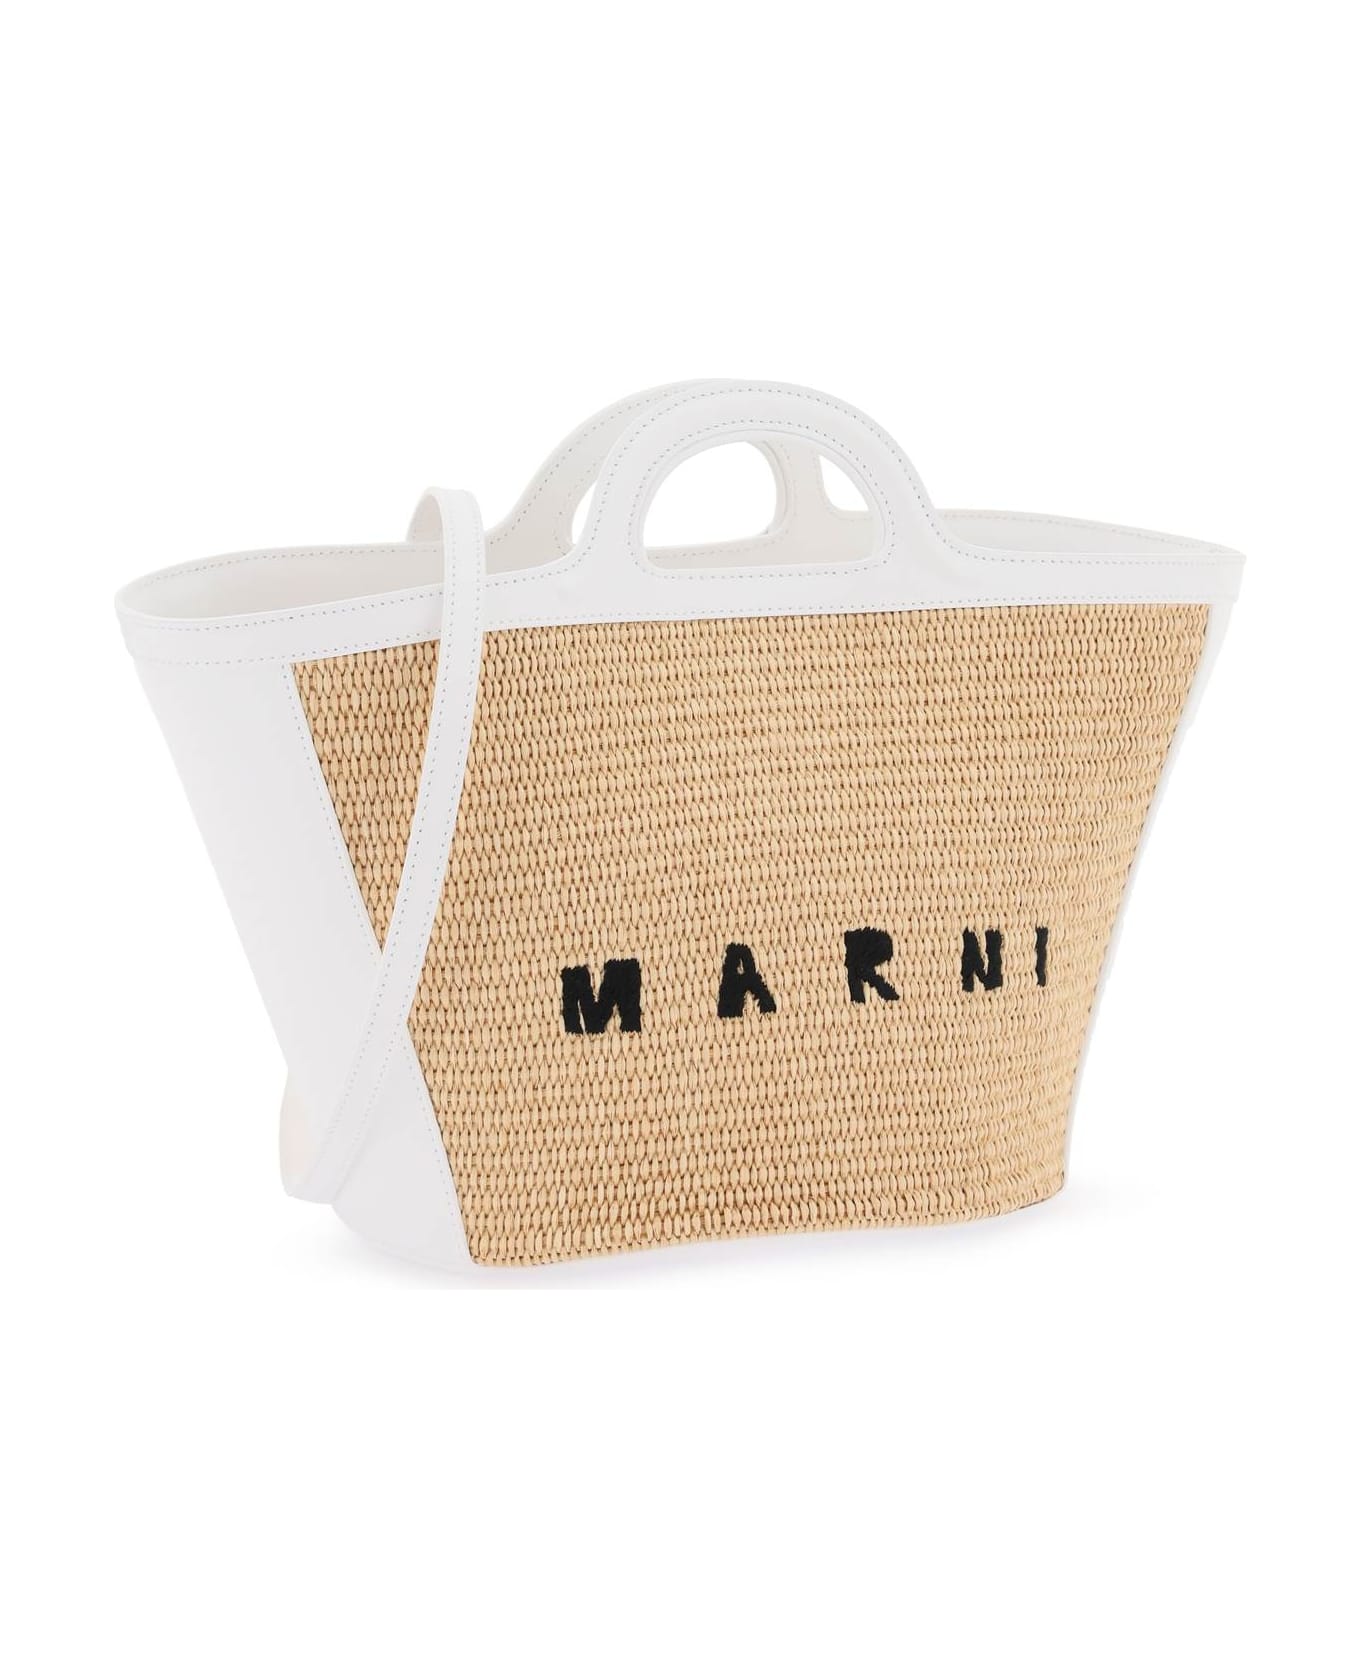 Marni Tropicalia Small Handbag - SAND STORM LILY WHITE (Beige)